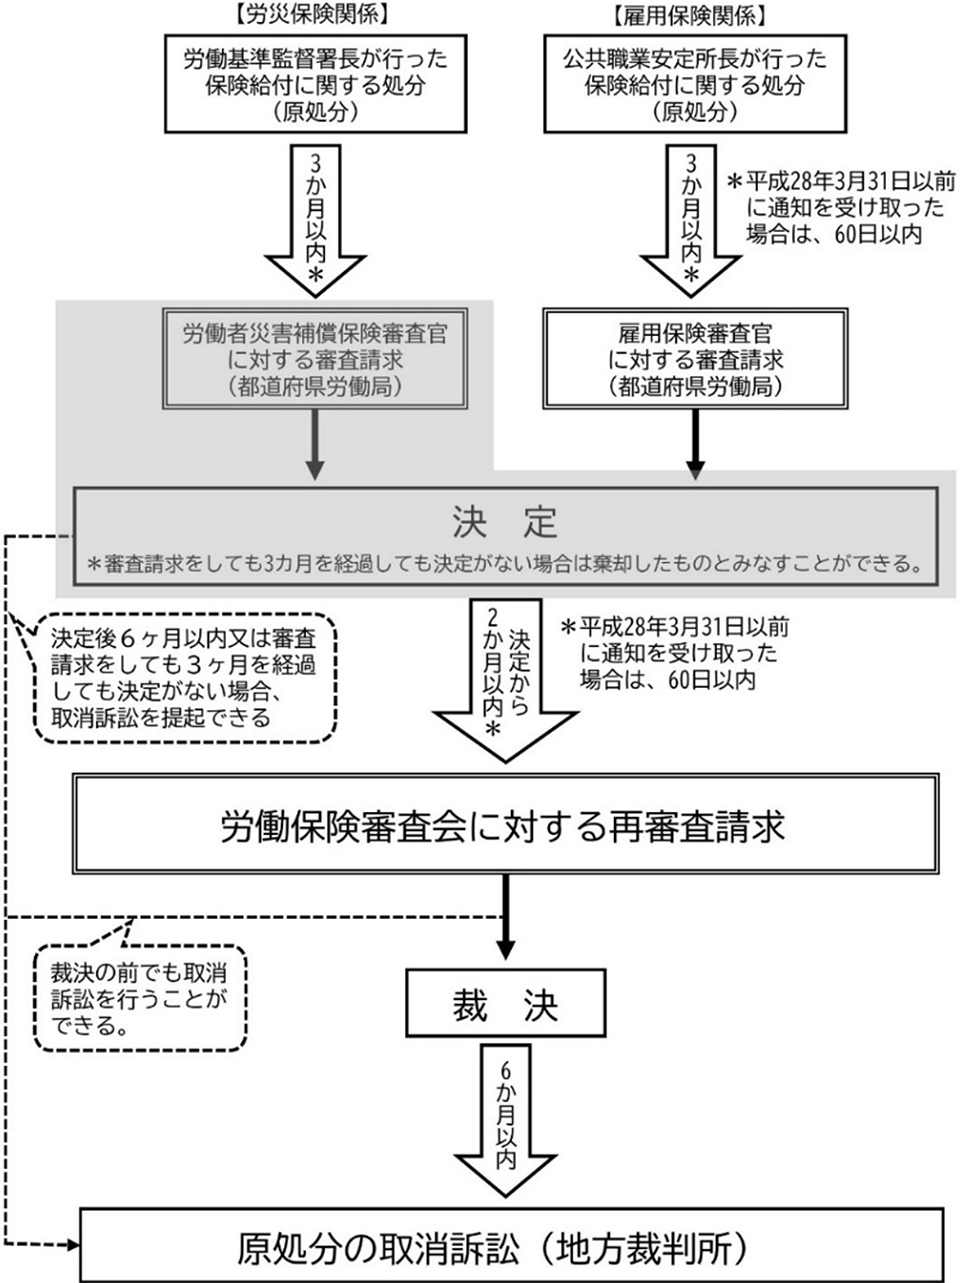 【図2】 労働保険審査制度の仕組み